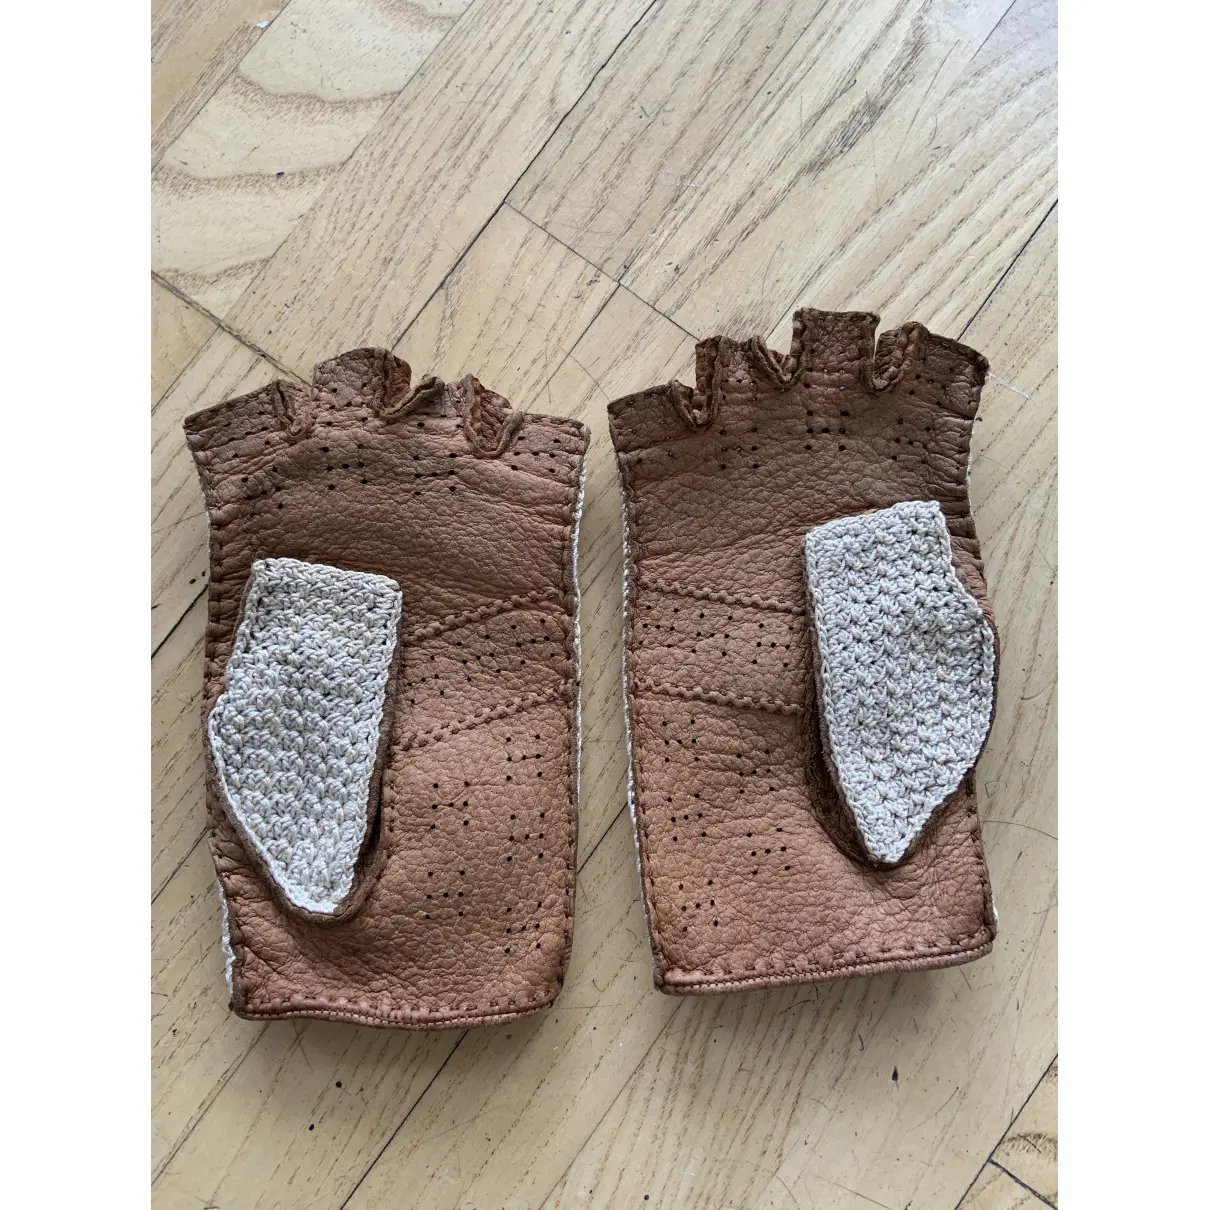 Buy Hermès Leather mittens online